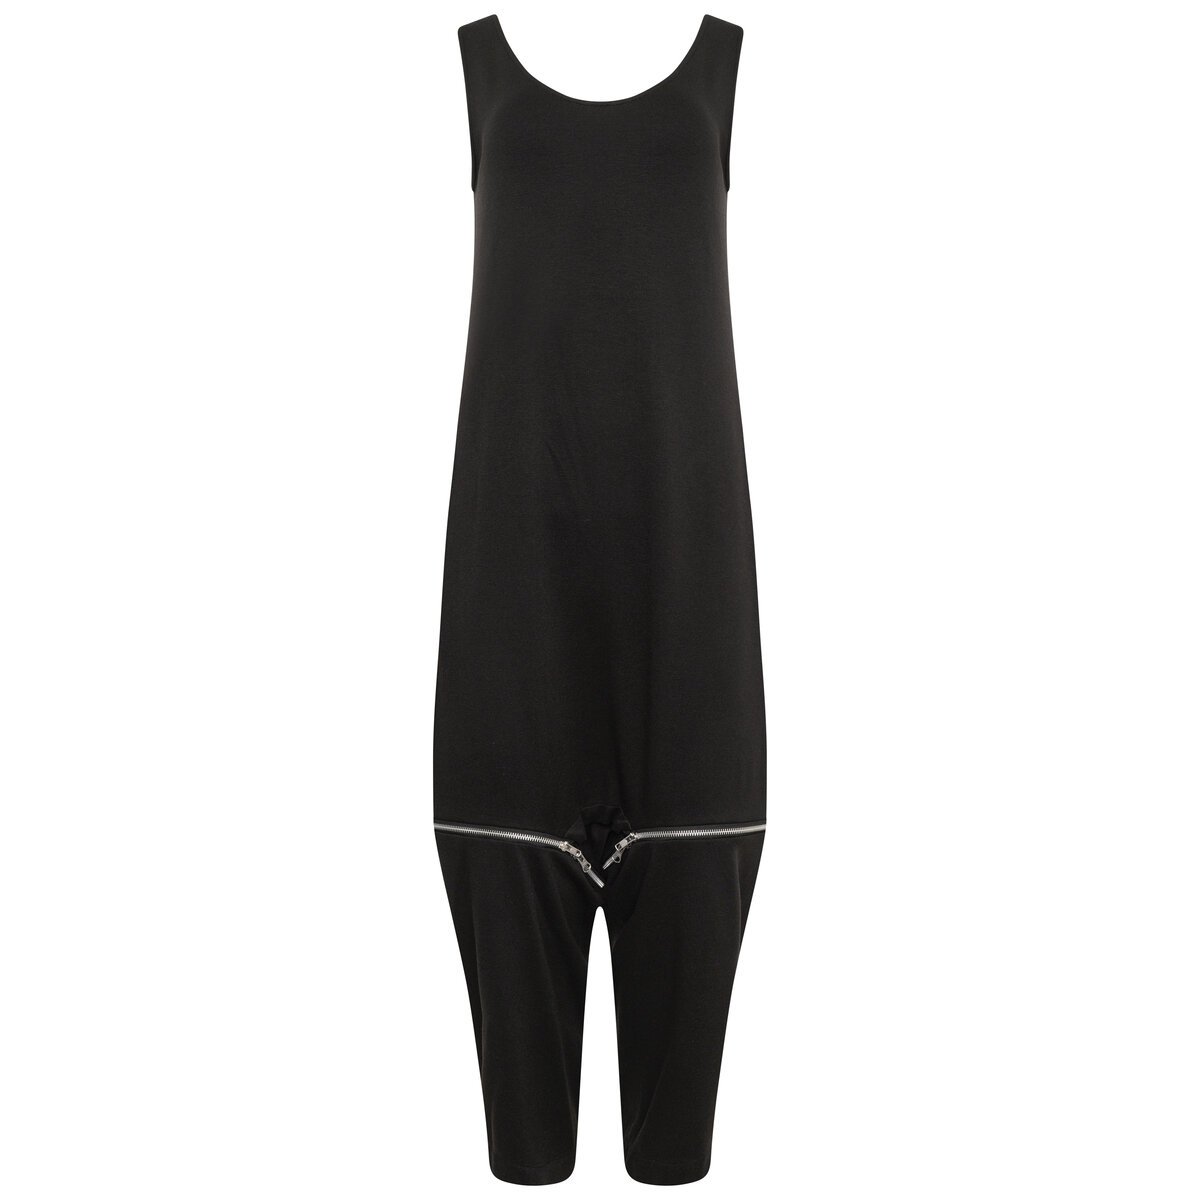 Ponte Overall / Dress 1 Black